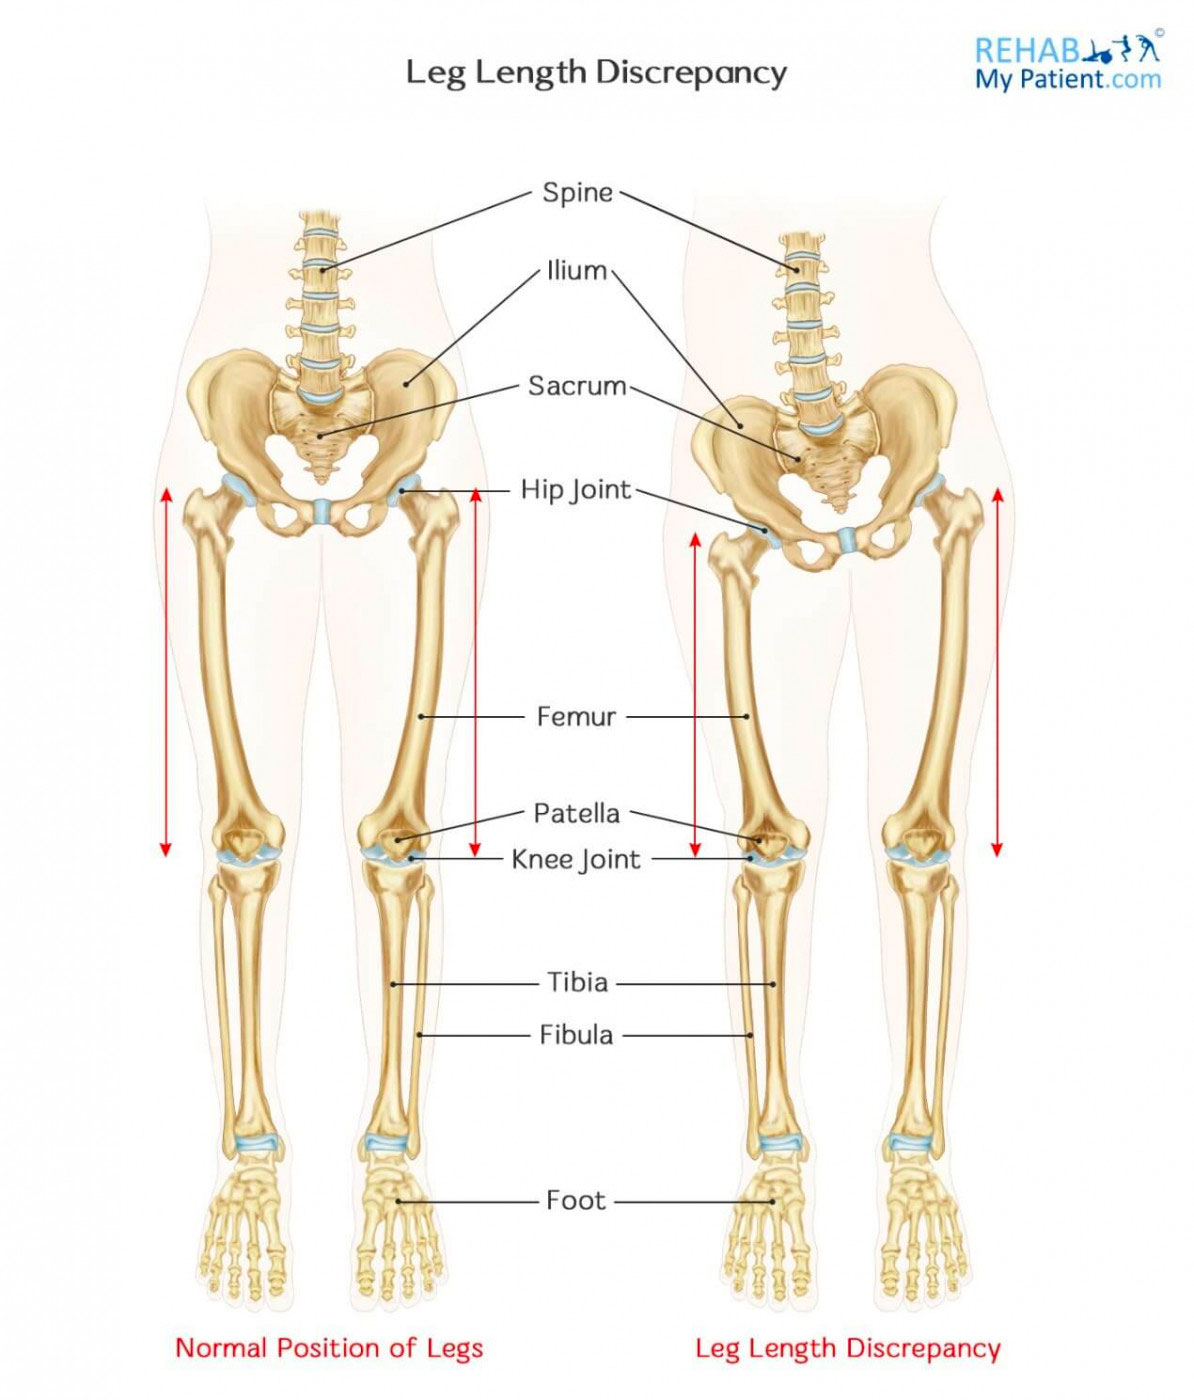 Diagram of normal position of legs vs leg length discrepancy